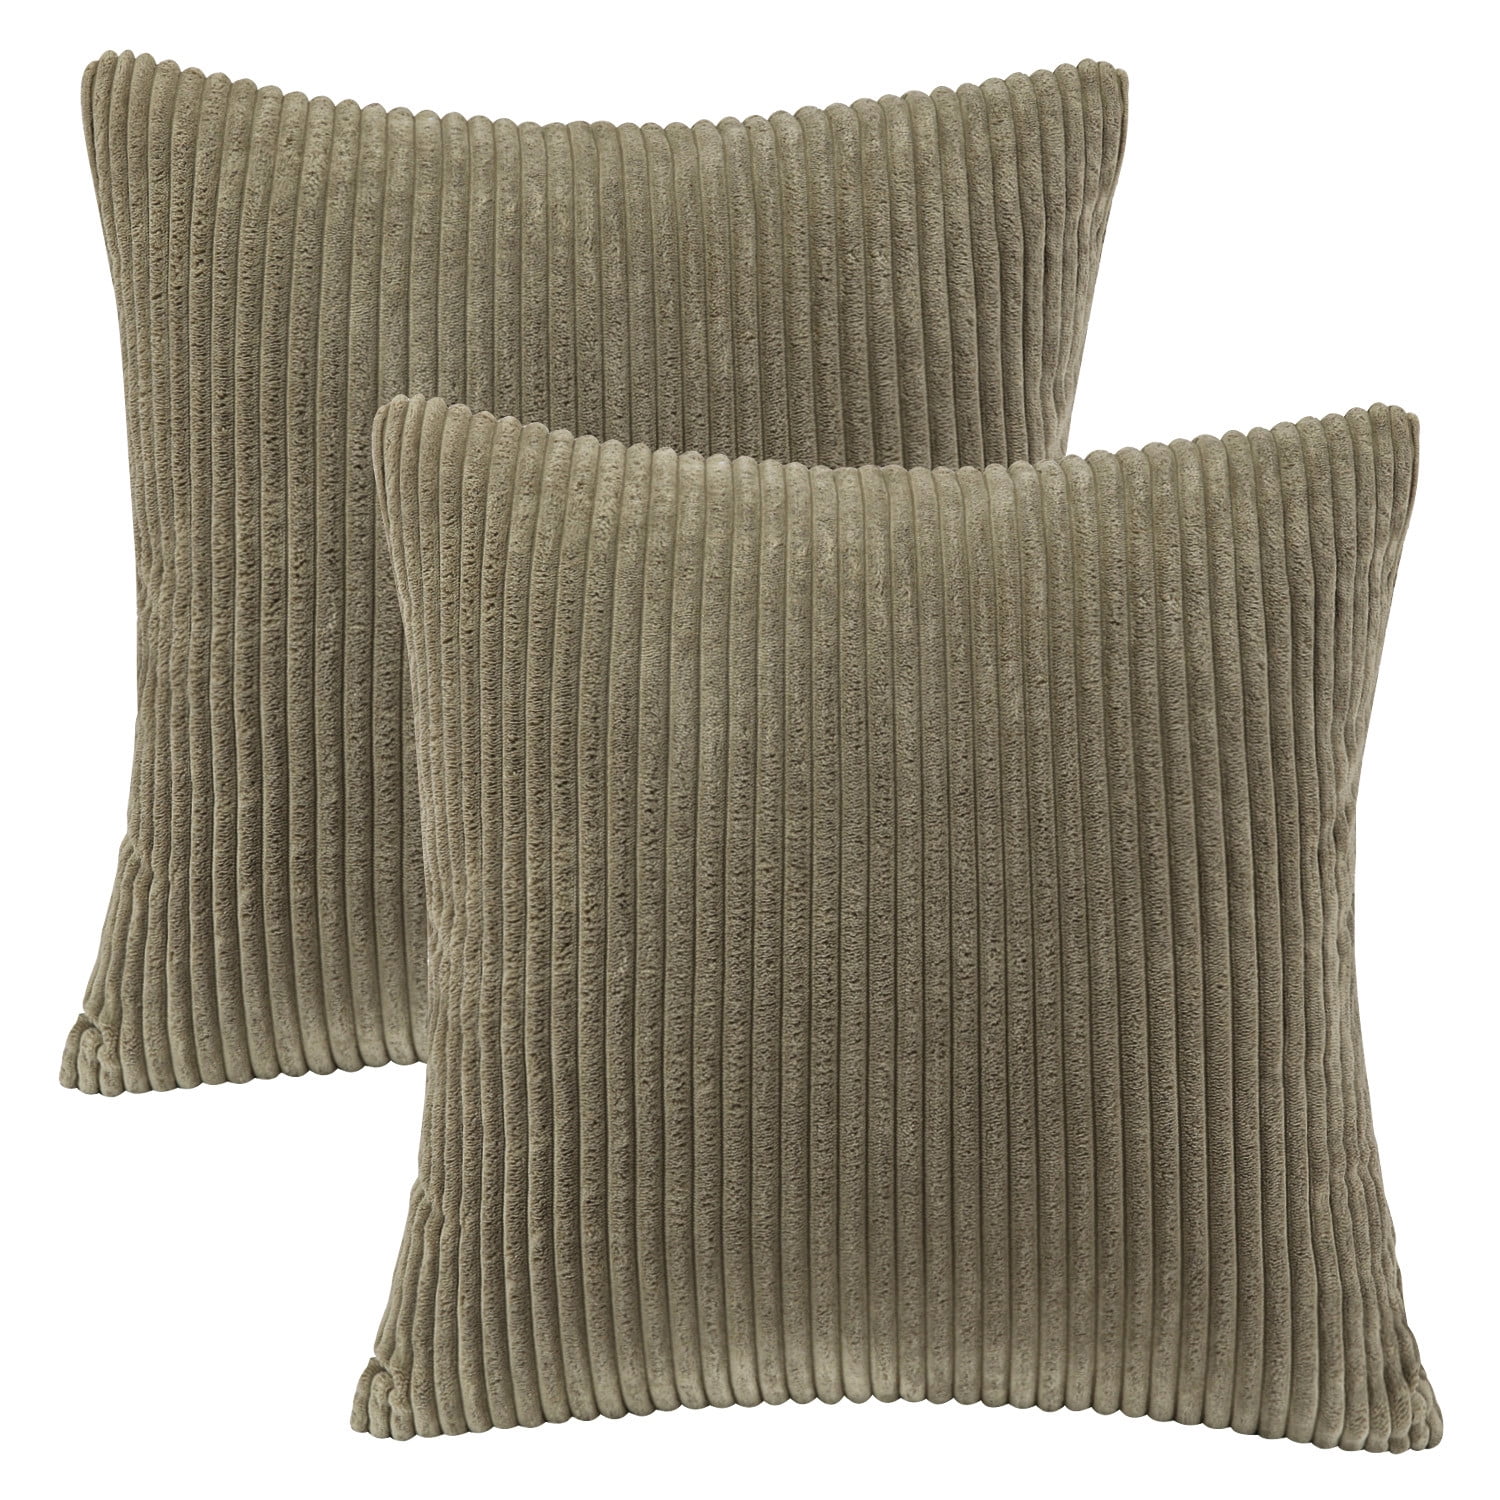 MIULEE Light Green Corduroy Decorative Throw Pillow Covers Pack of 2  Pom-pom Soft Boho Striped Pillo…See more MIULEE Light Green Corduroy  Decorative